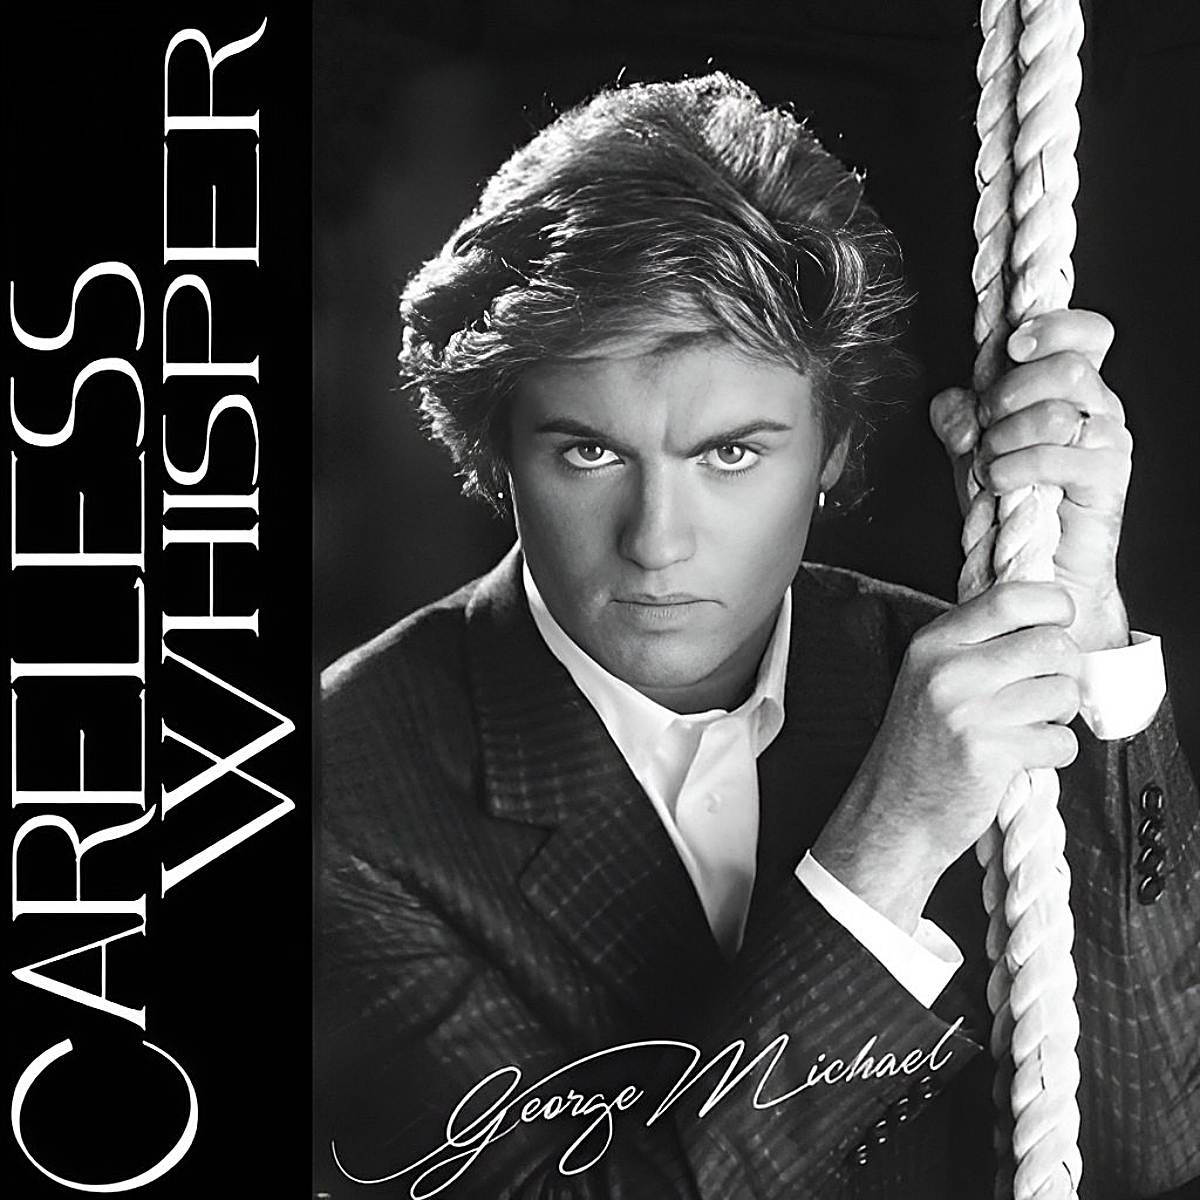 George Michael auf dem Cover des Songs "Careless Whisper".